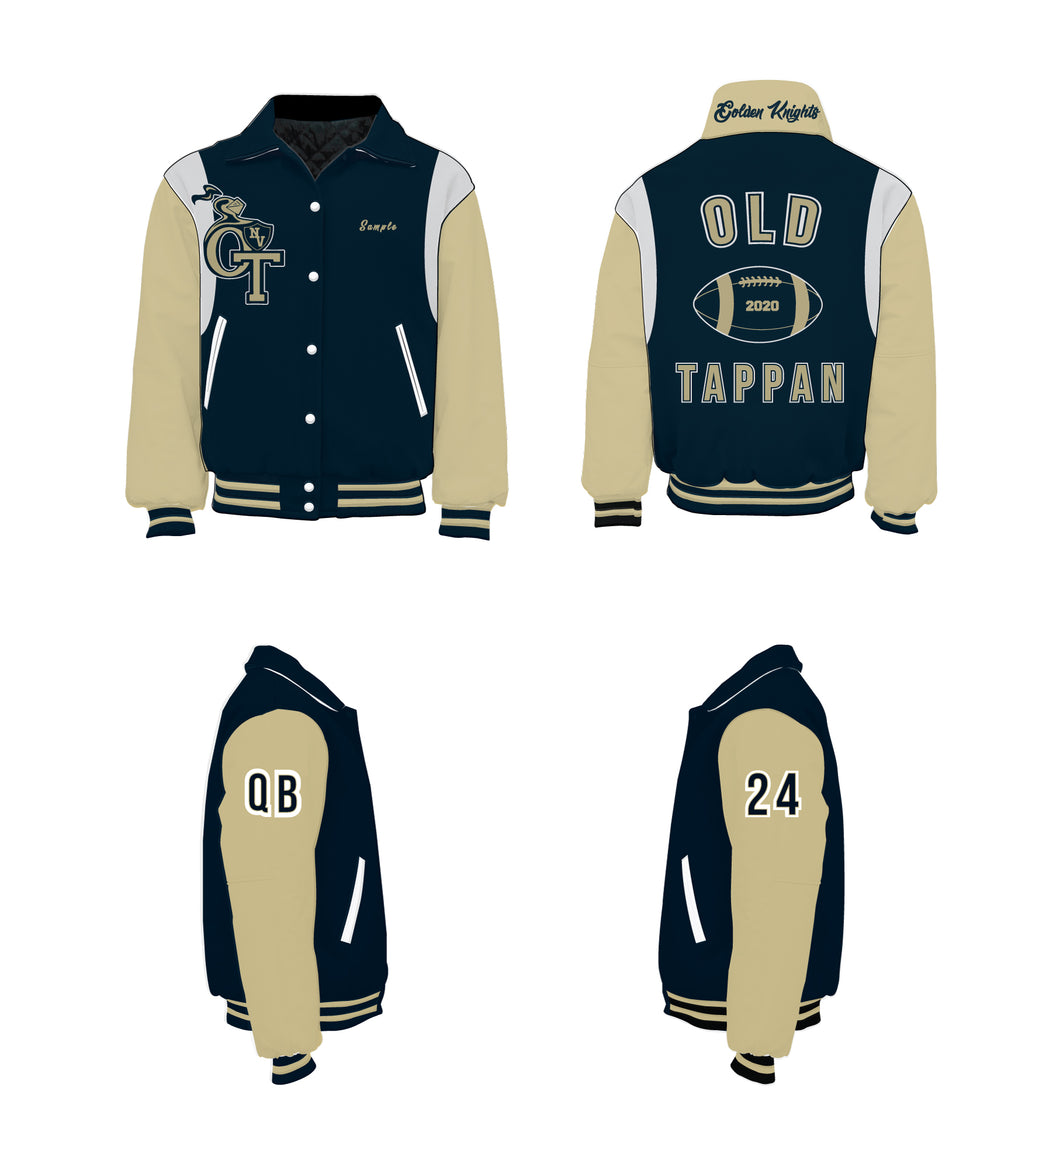 NVOT Golden Knights Varsity Jacket - Design 1 (Gold Sleeves)